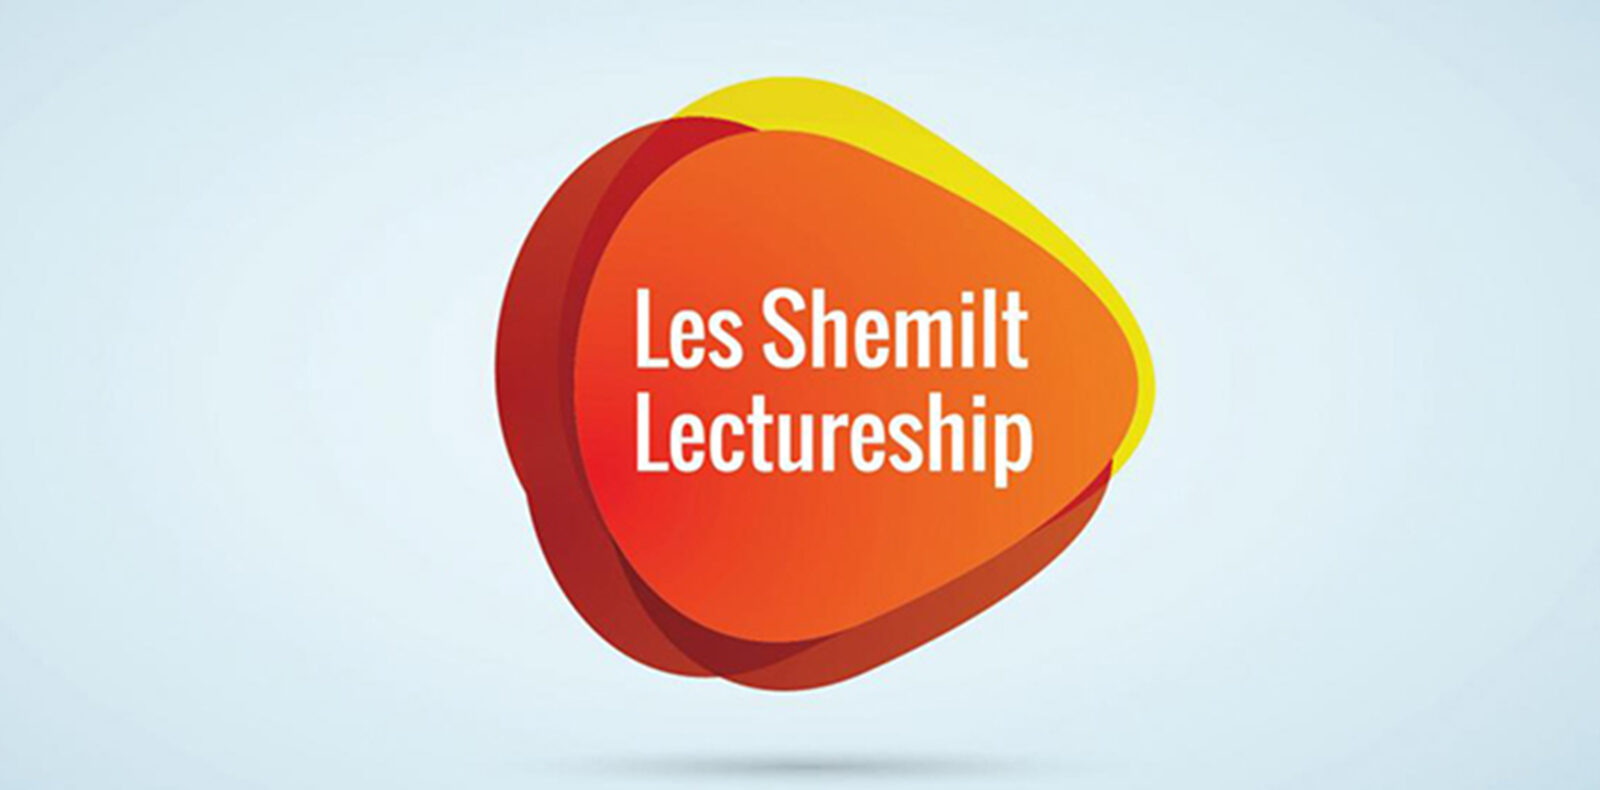 Les Shemilt Lectureship